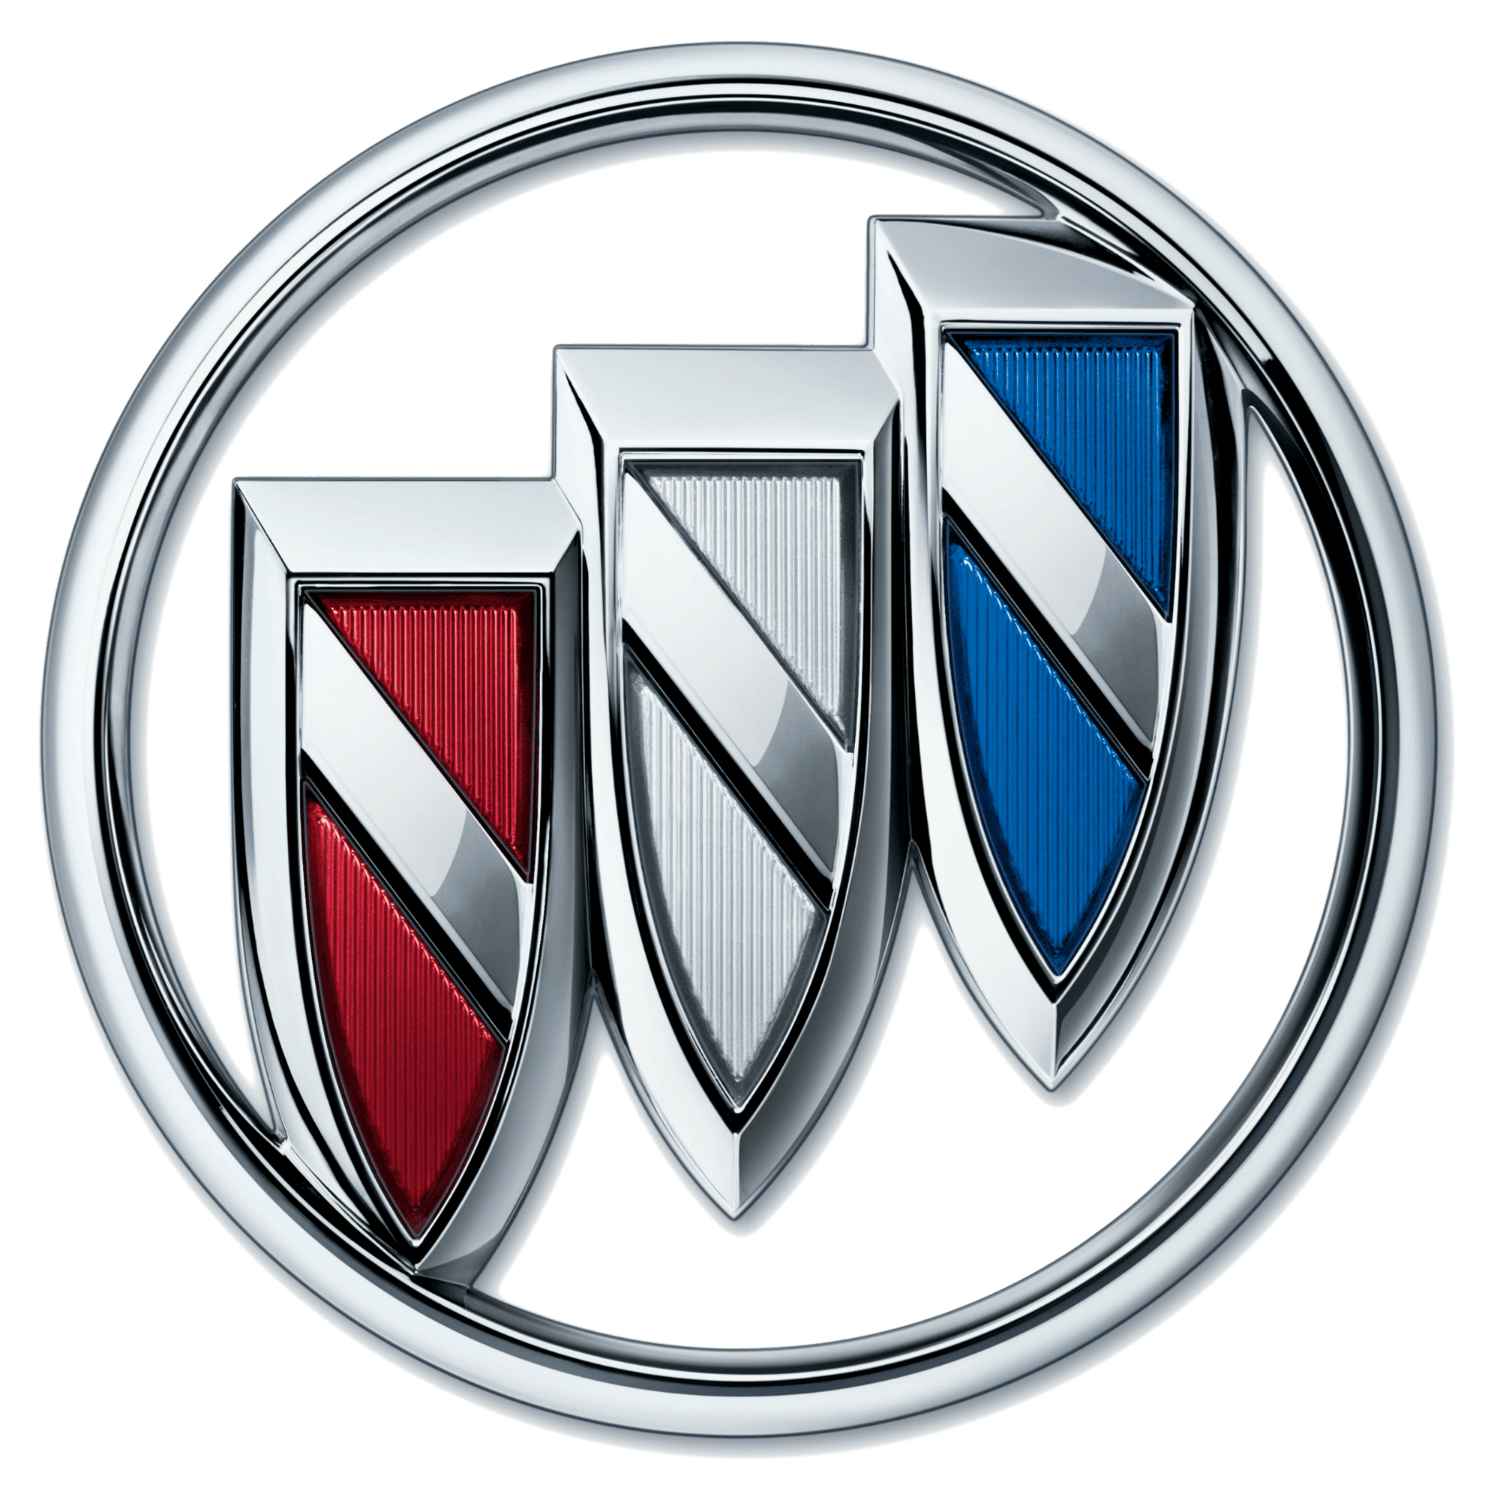 Affordable Car Logo - The Most Popular American Car Brands | Car Brand Names.com